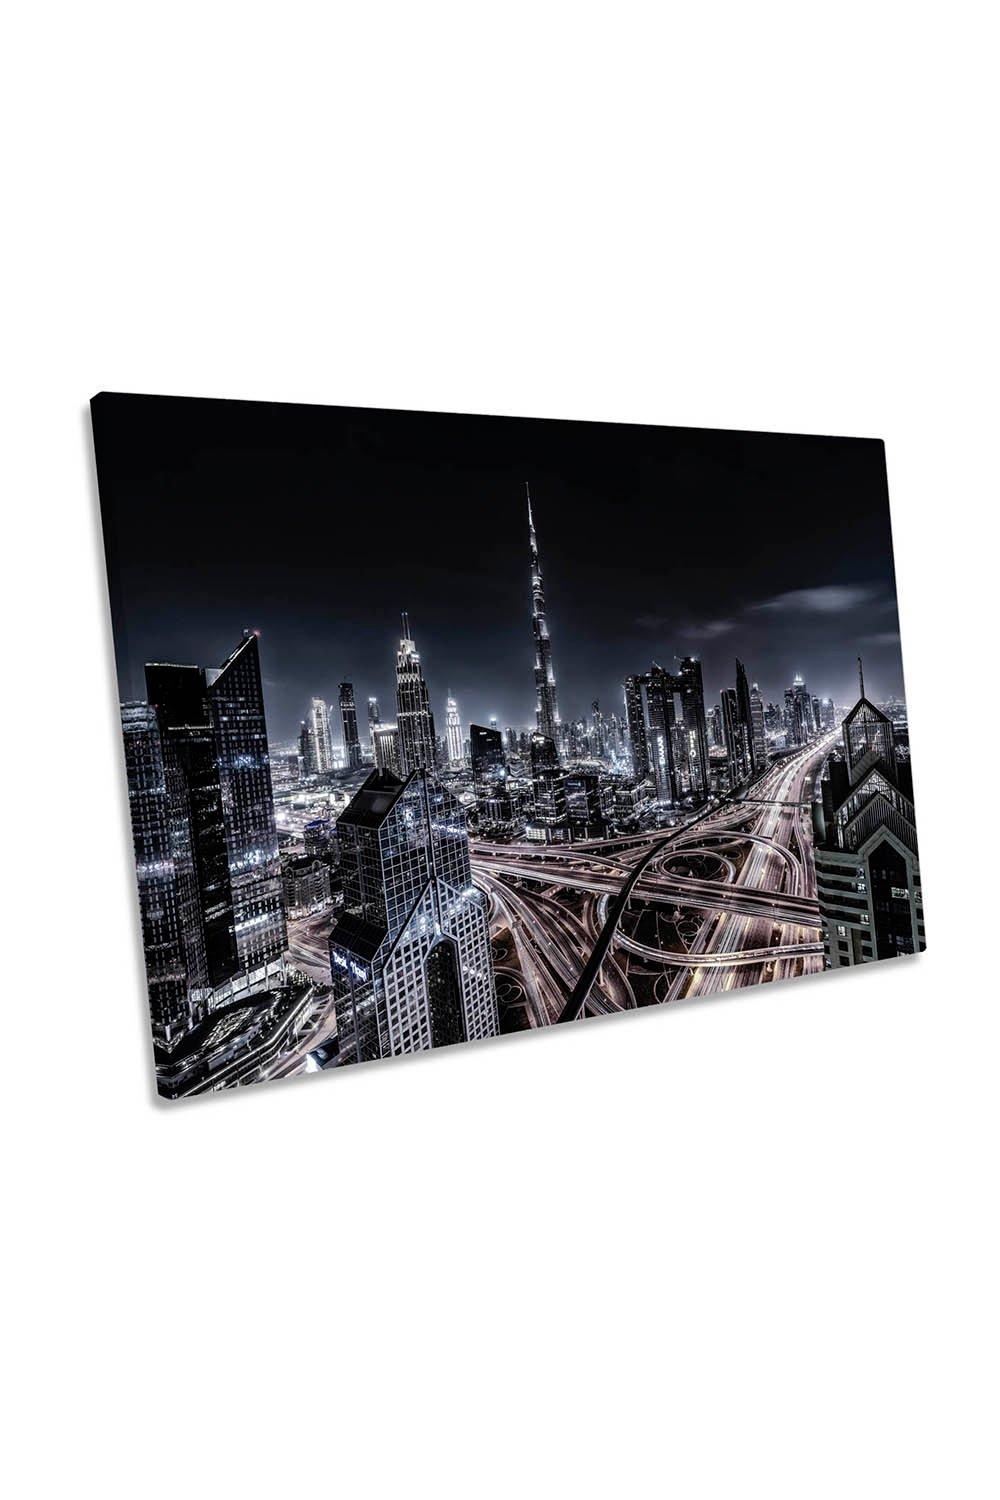 Magnum Dubai City Skyline Night Canvas Wall Art Picture Print